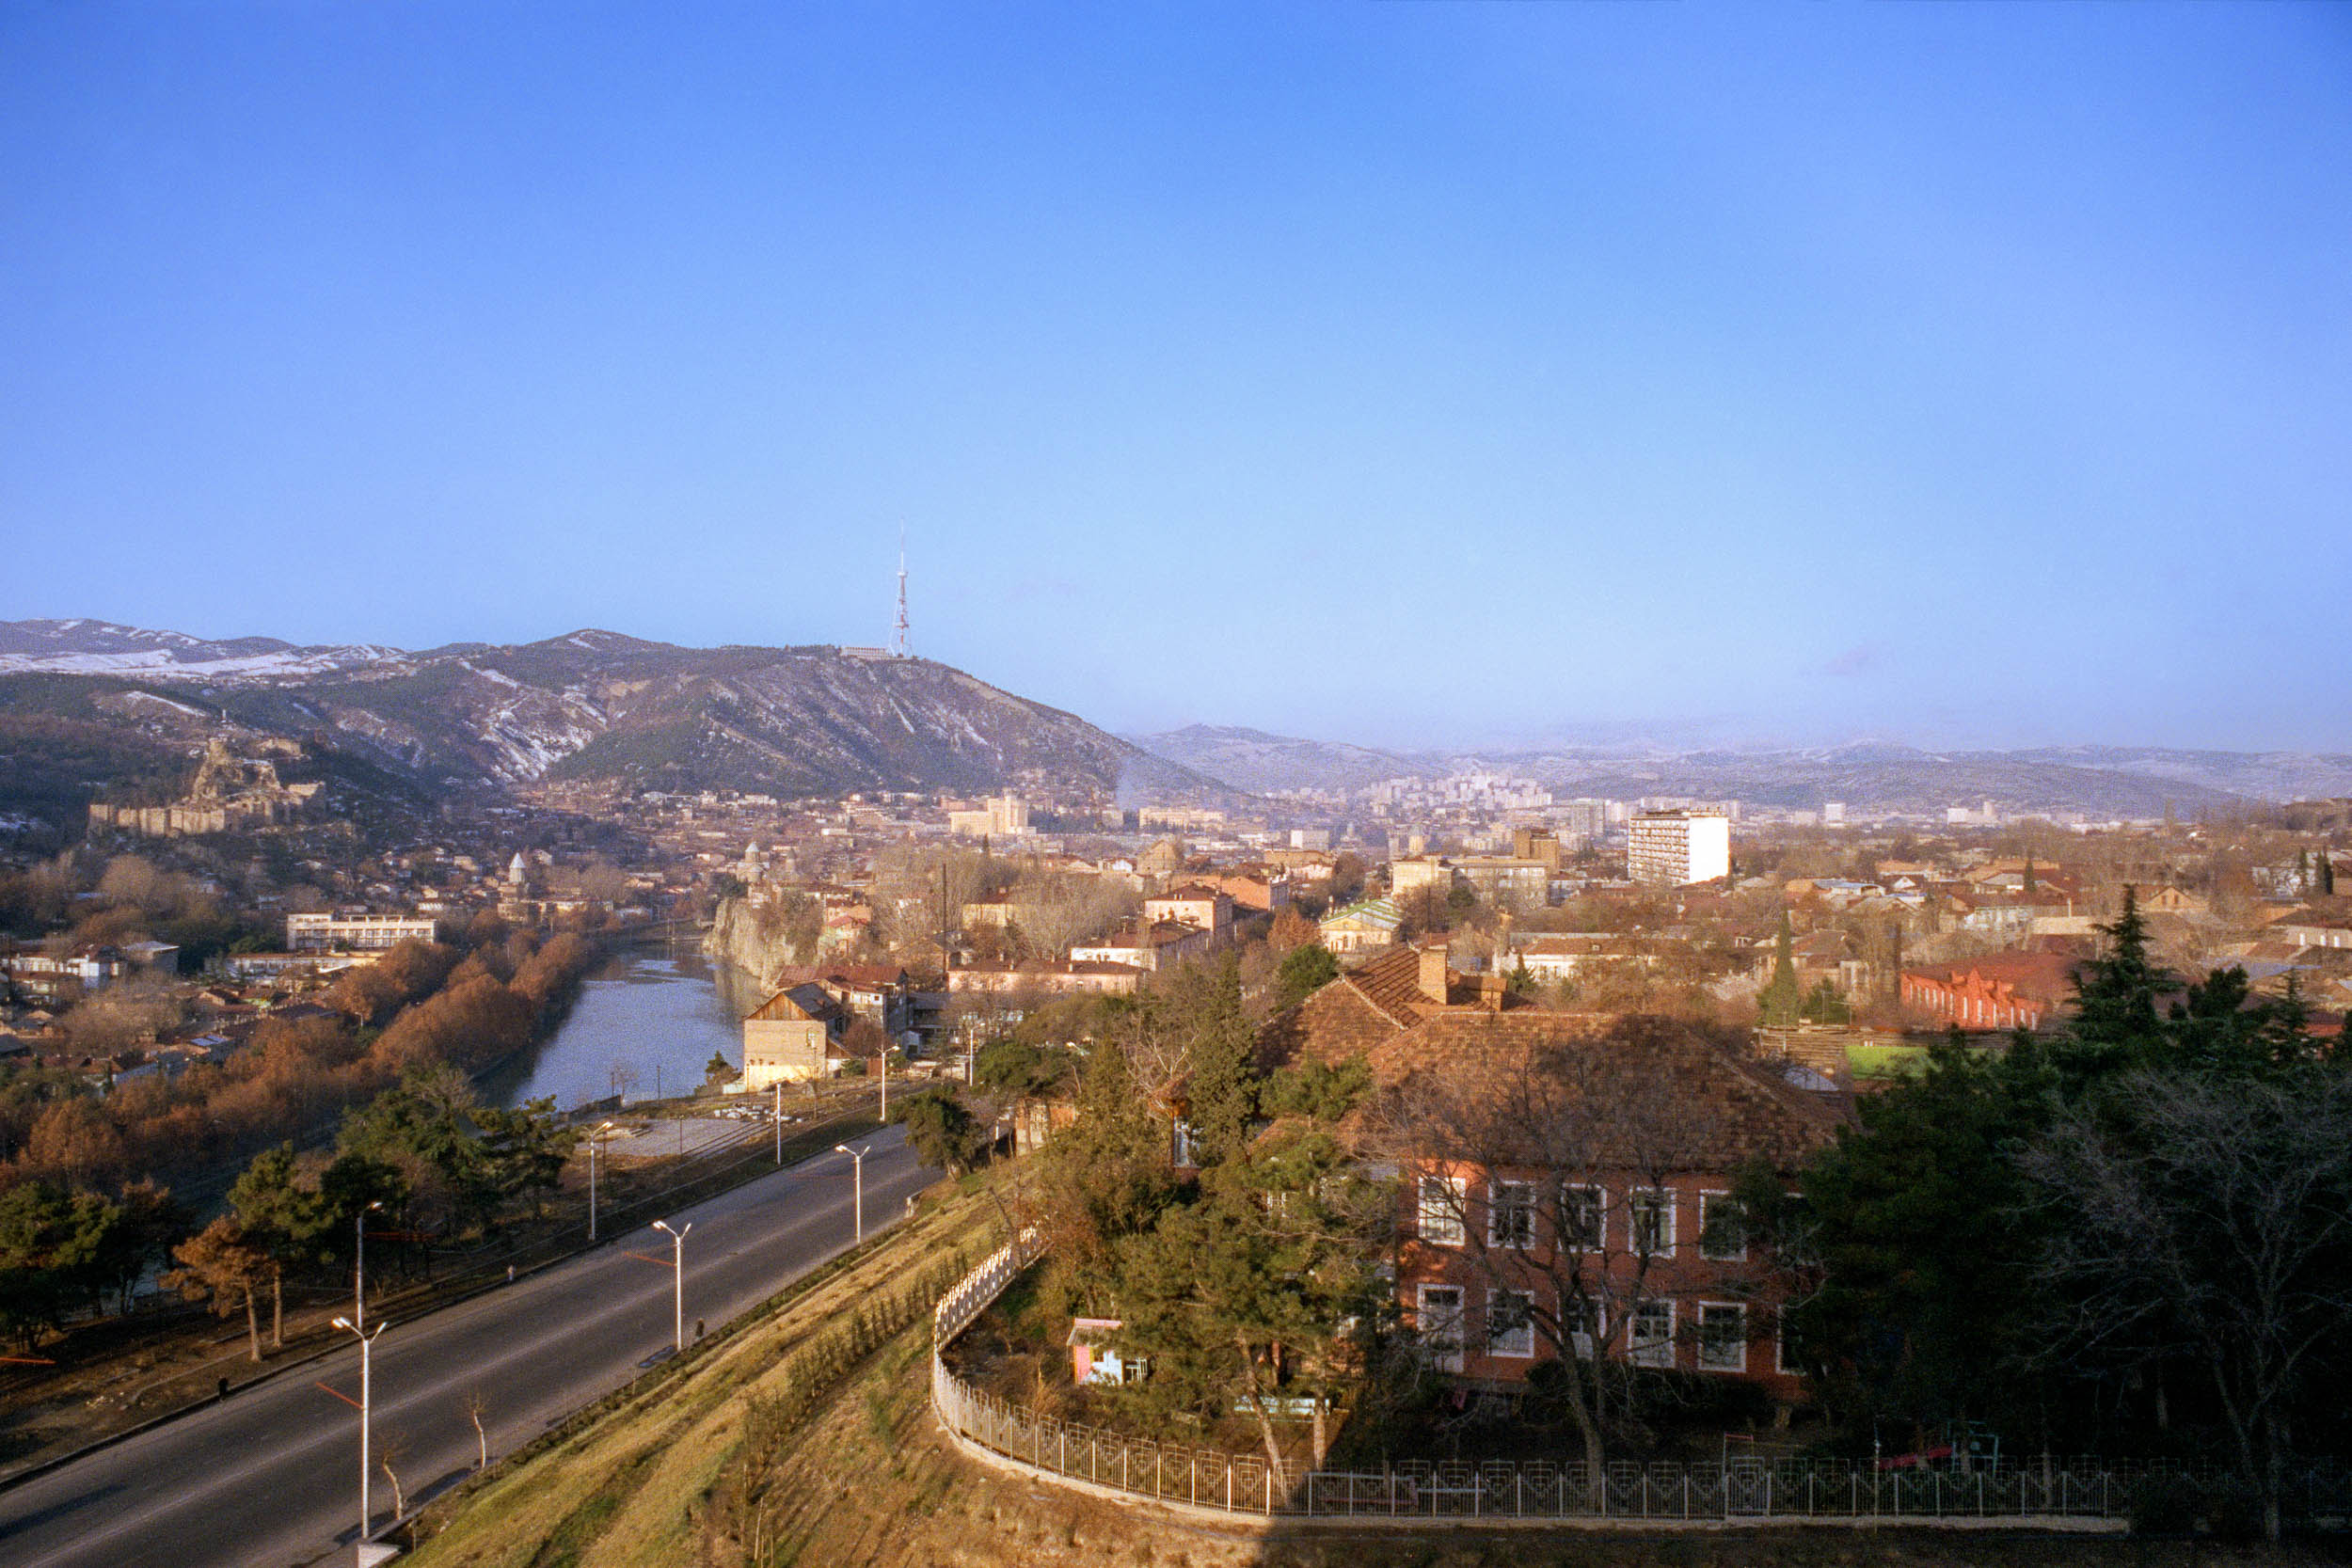 Tbilisi, Georgia, Jan 1992